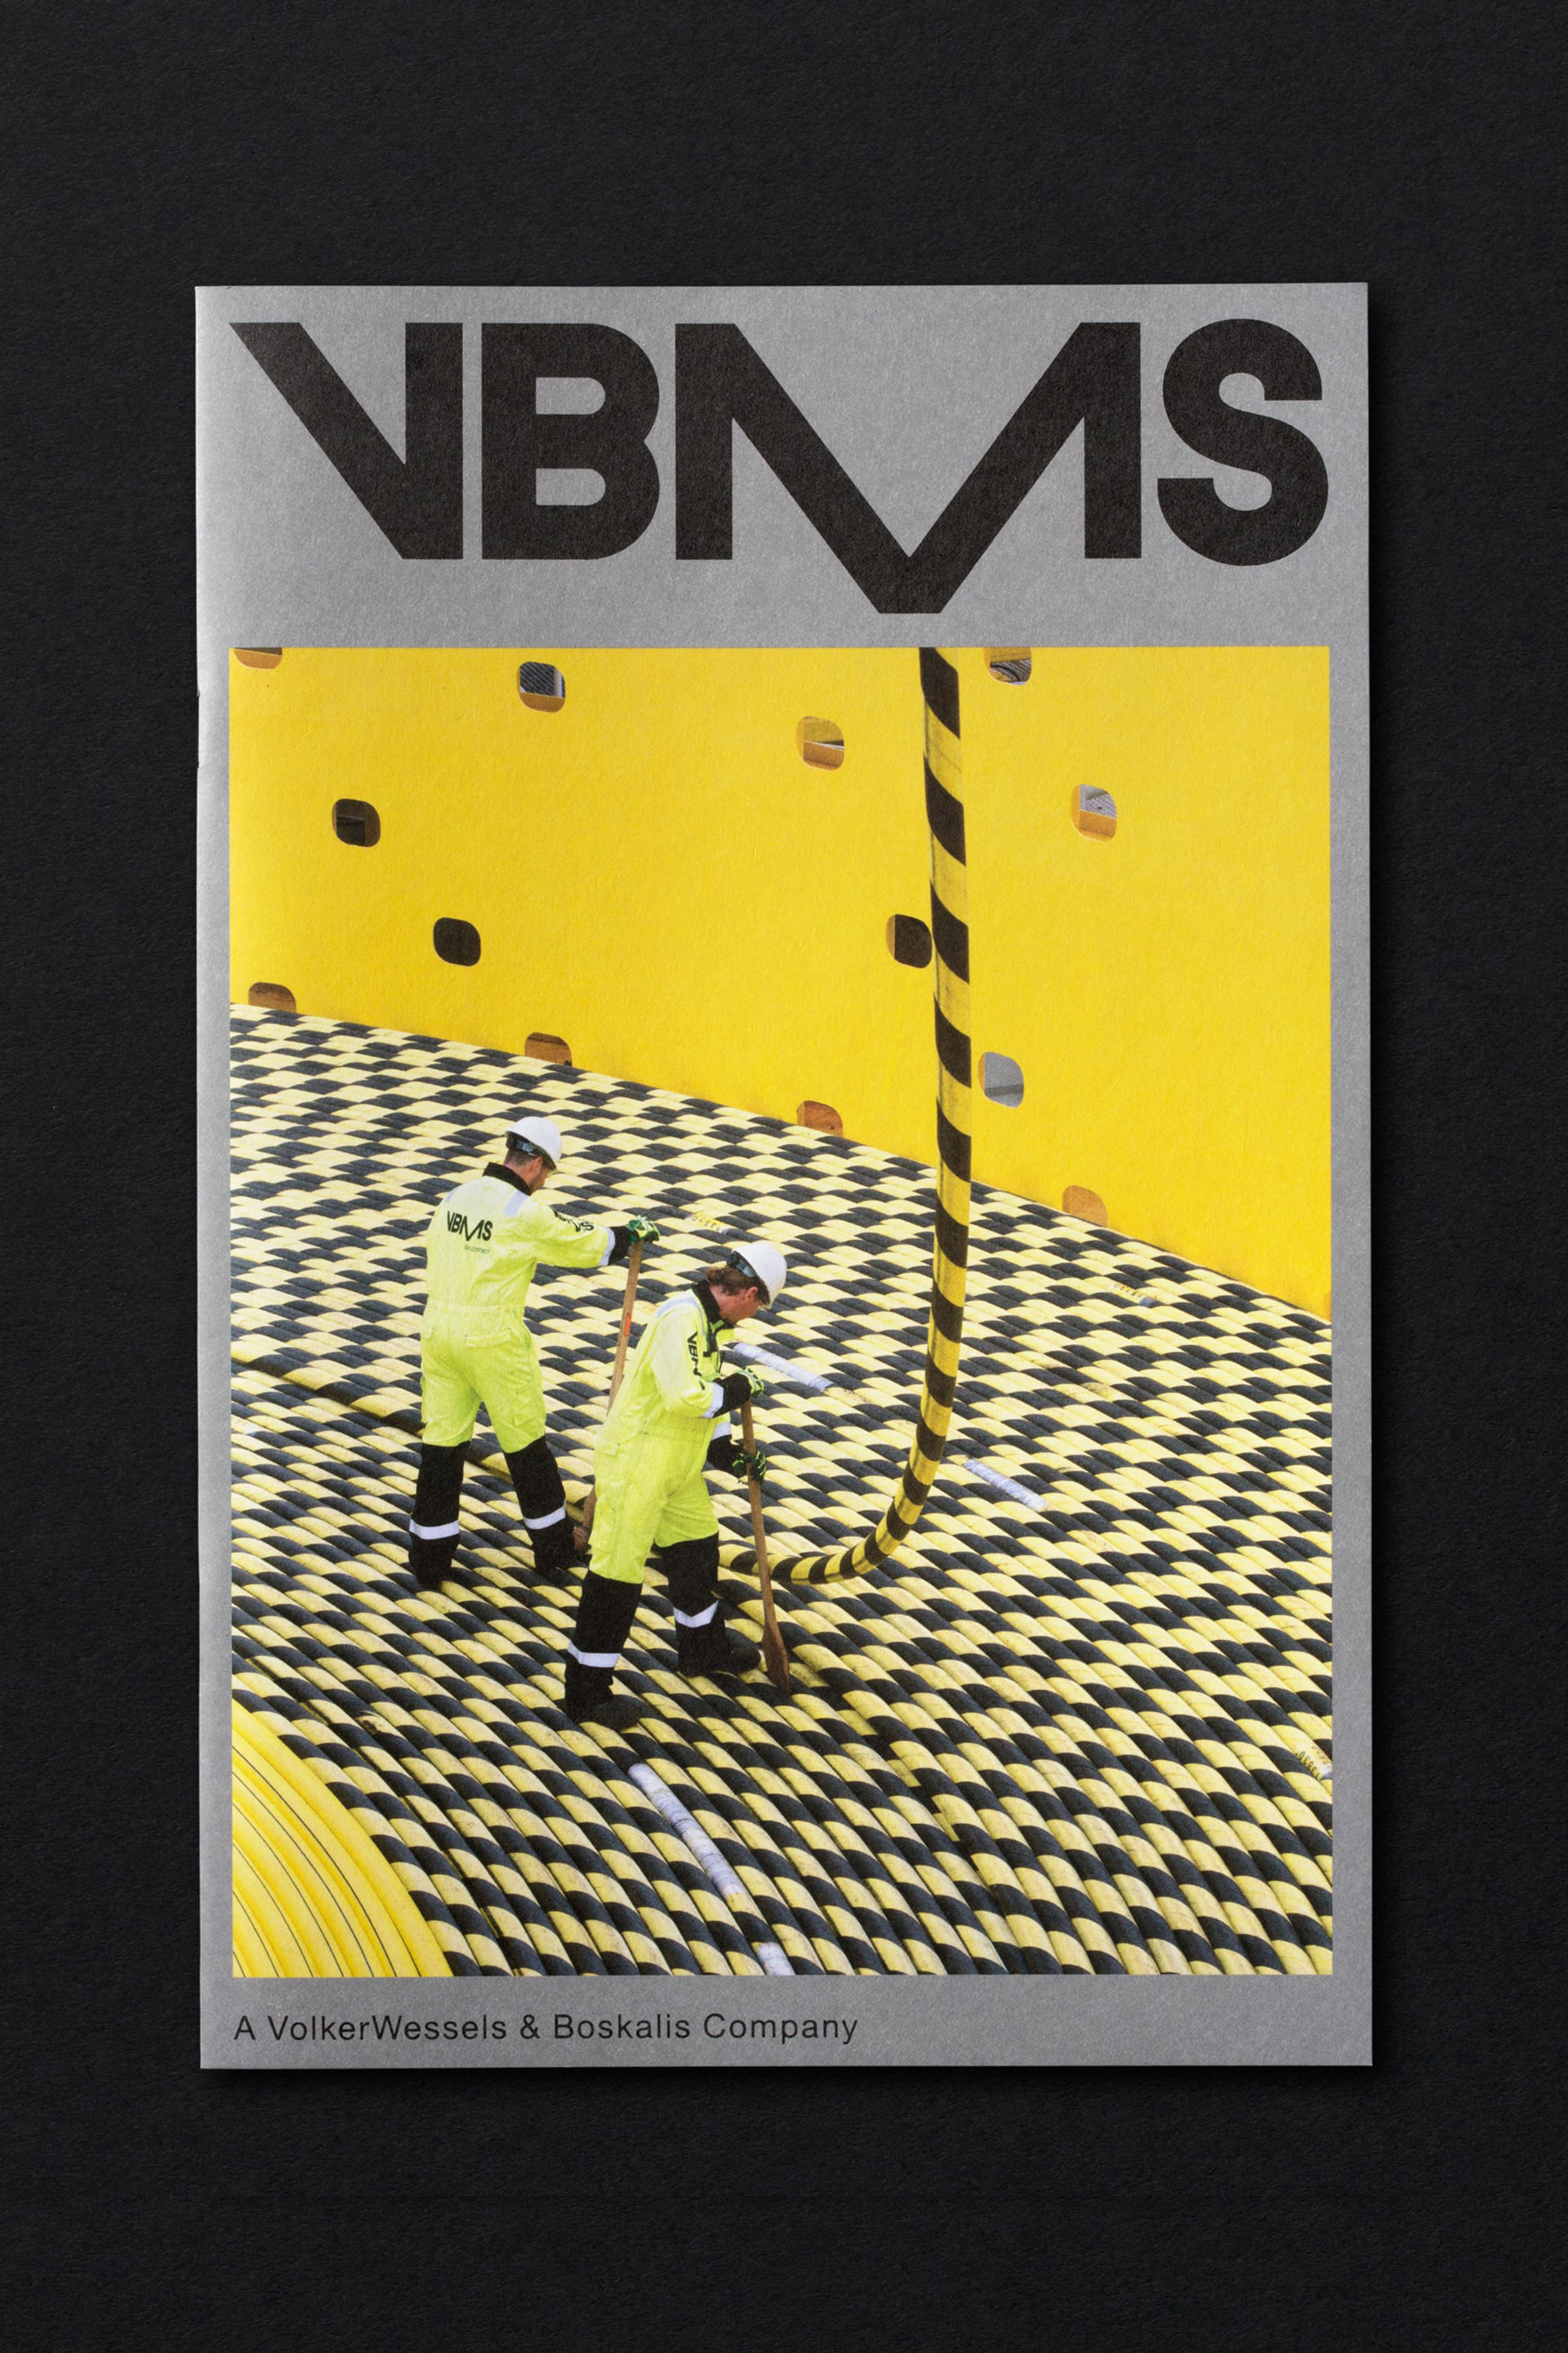 studio dumbar design visual brand identity for VBMS expert in offshore installations corporate brochure design